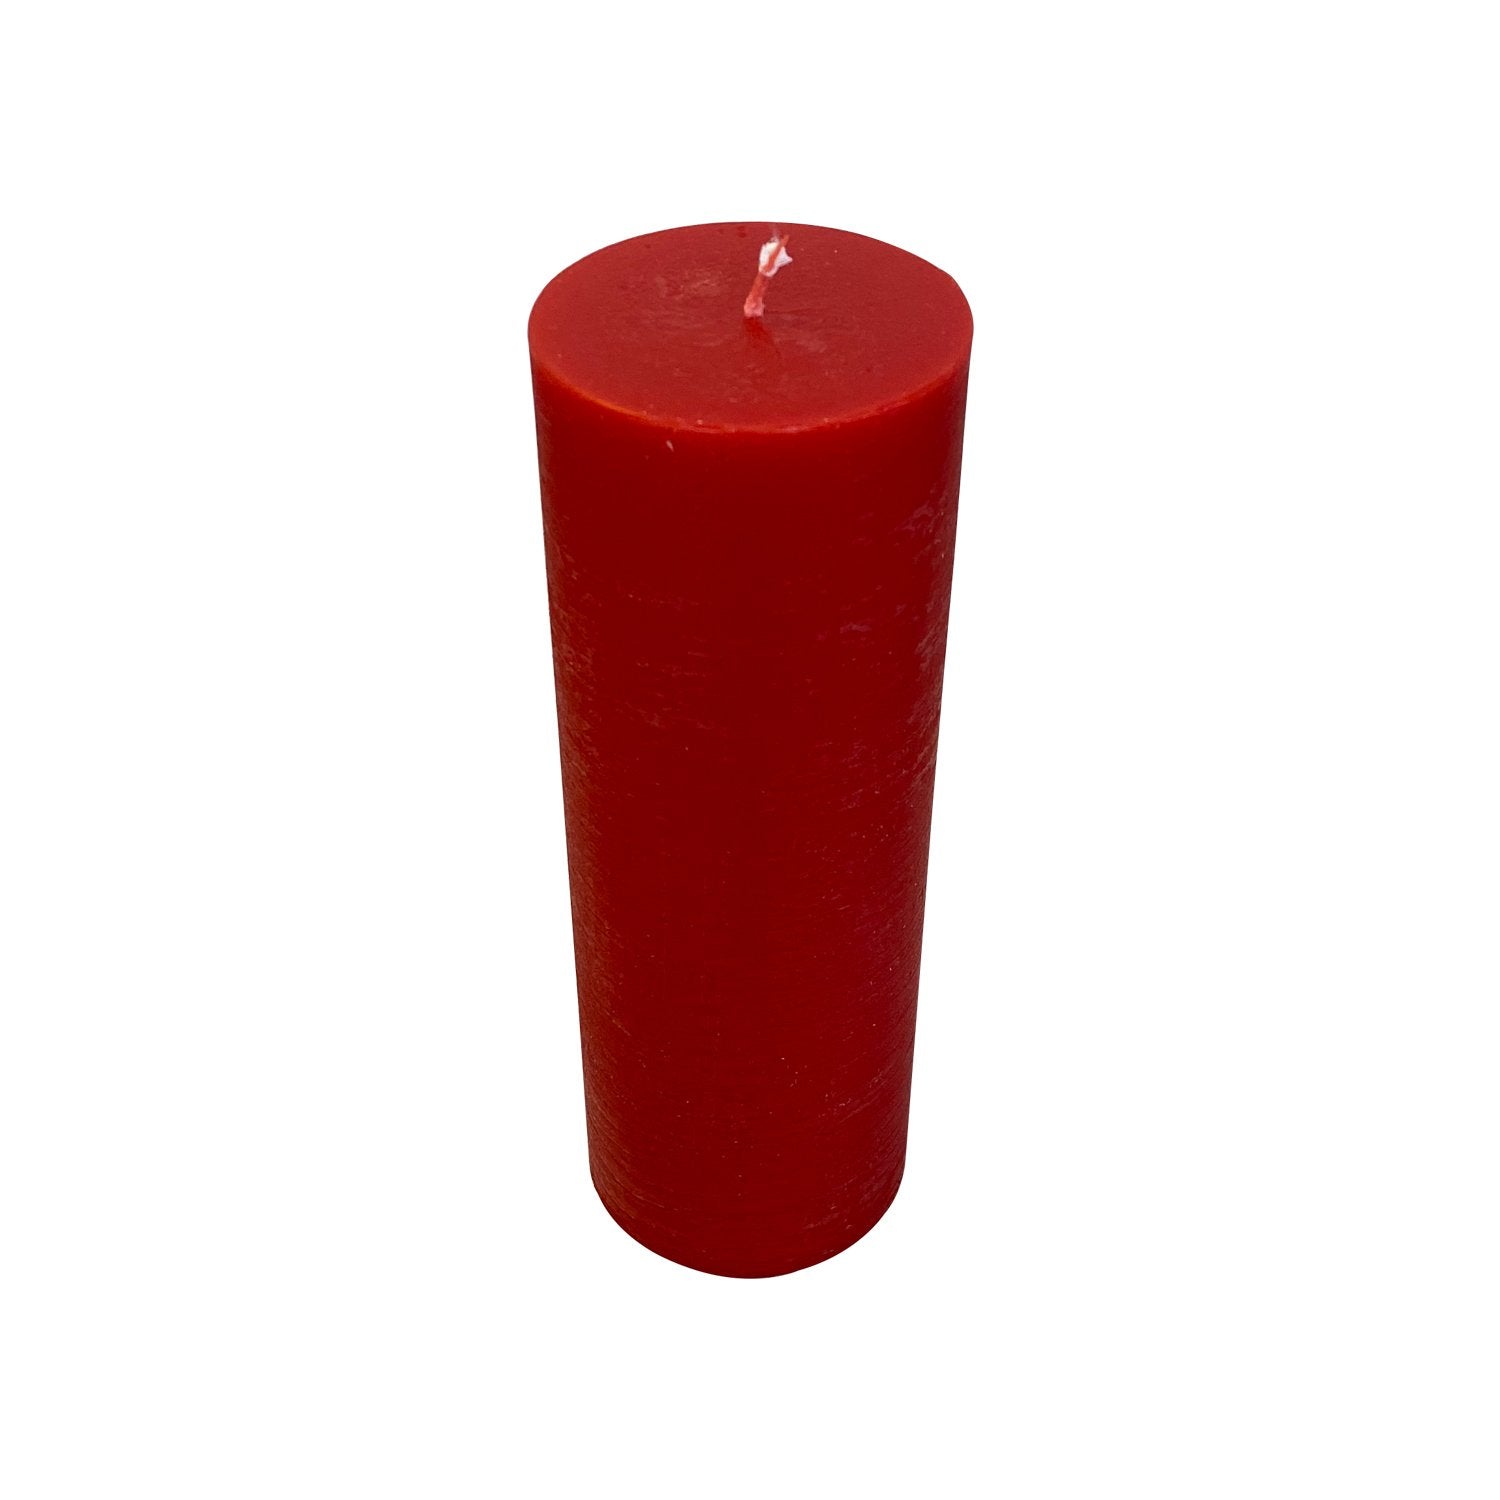 Blok lys - Rød (6cm i diameter)